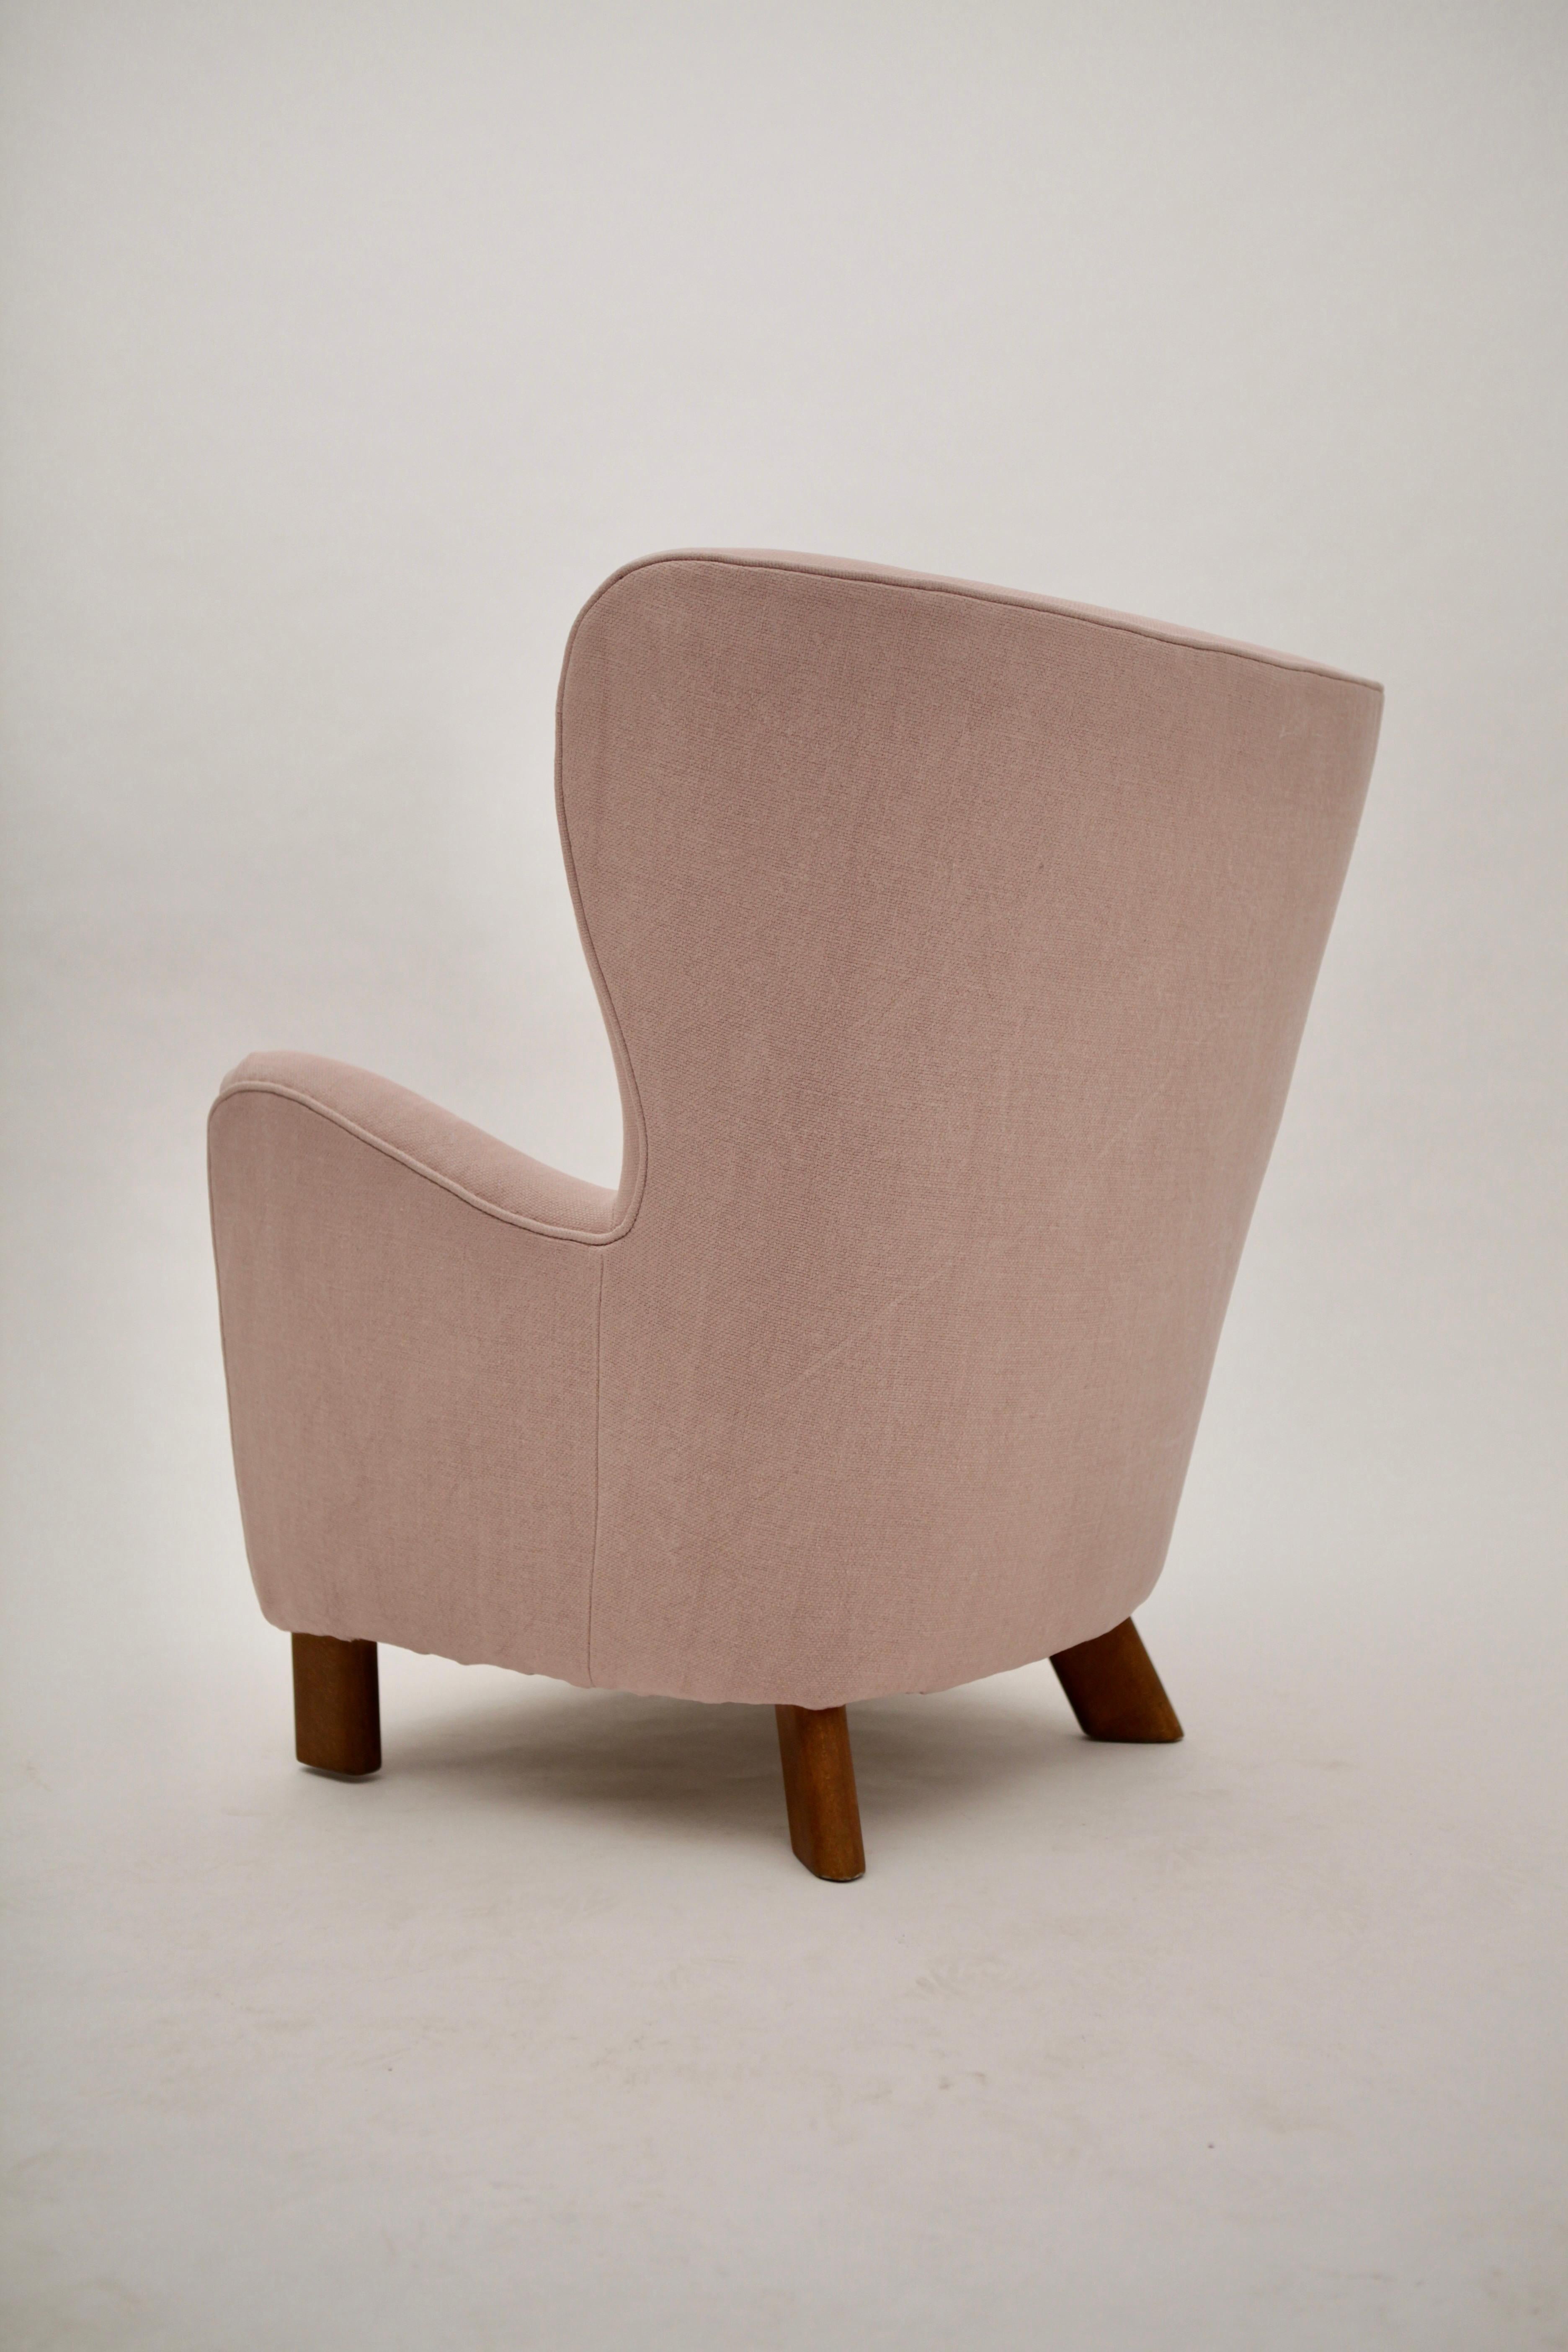 Stained Fritz Hansen High Back Lounge Chair, Model 1669, Denmark, 1940s For Sale